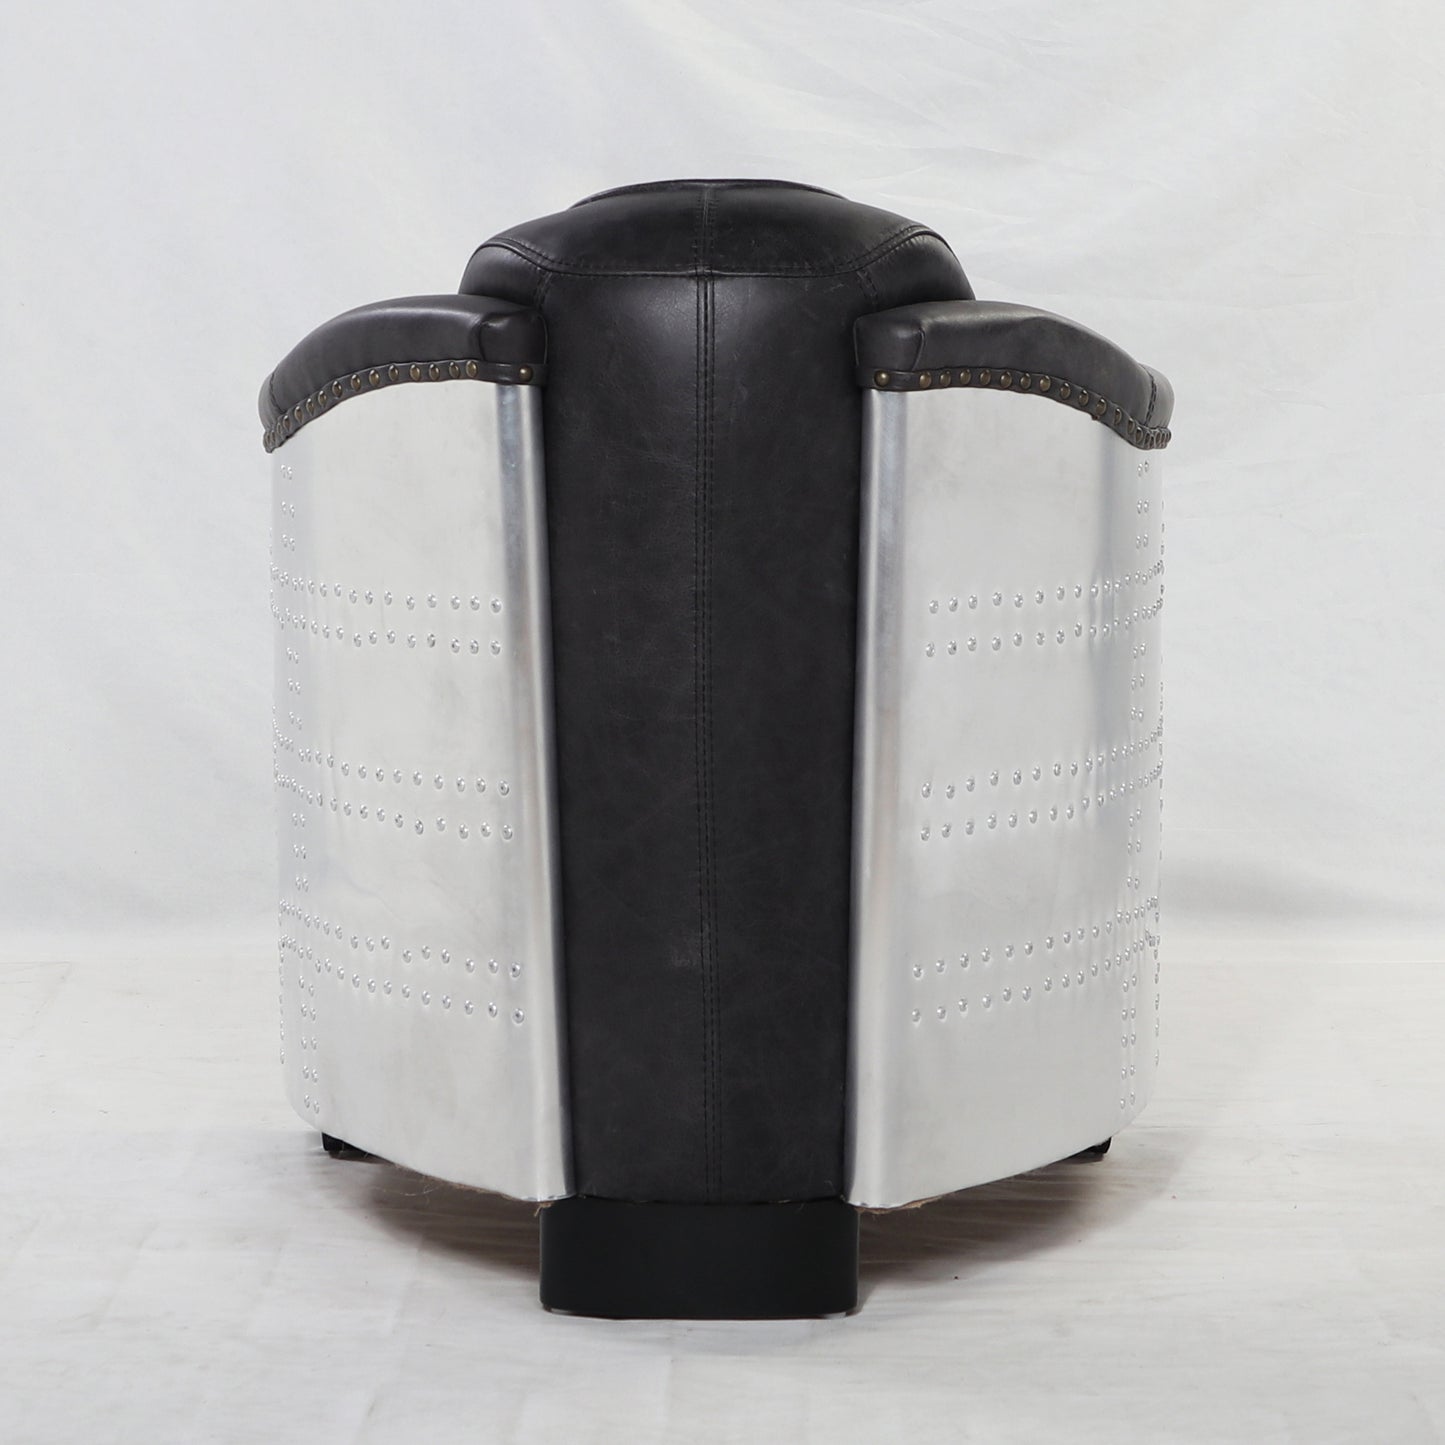 Aviator Tub Chair | Antique Slate (Leather Inner Arm)